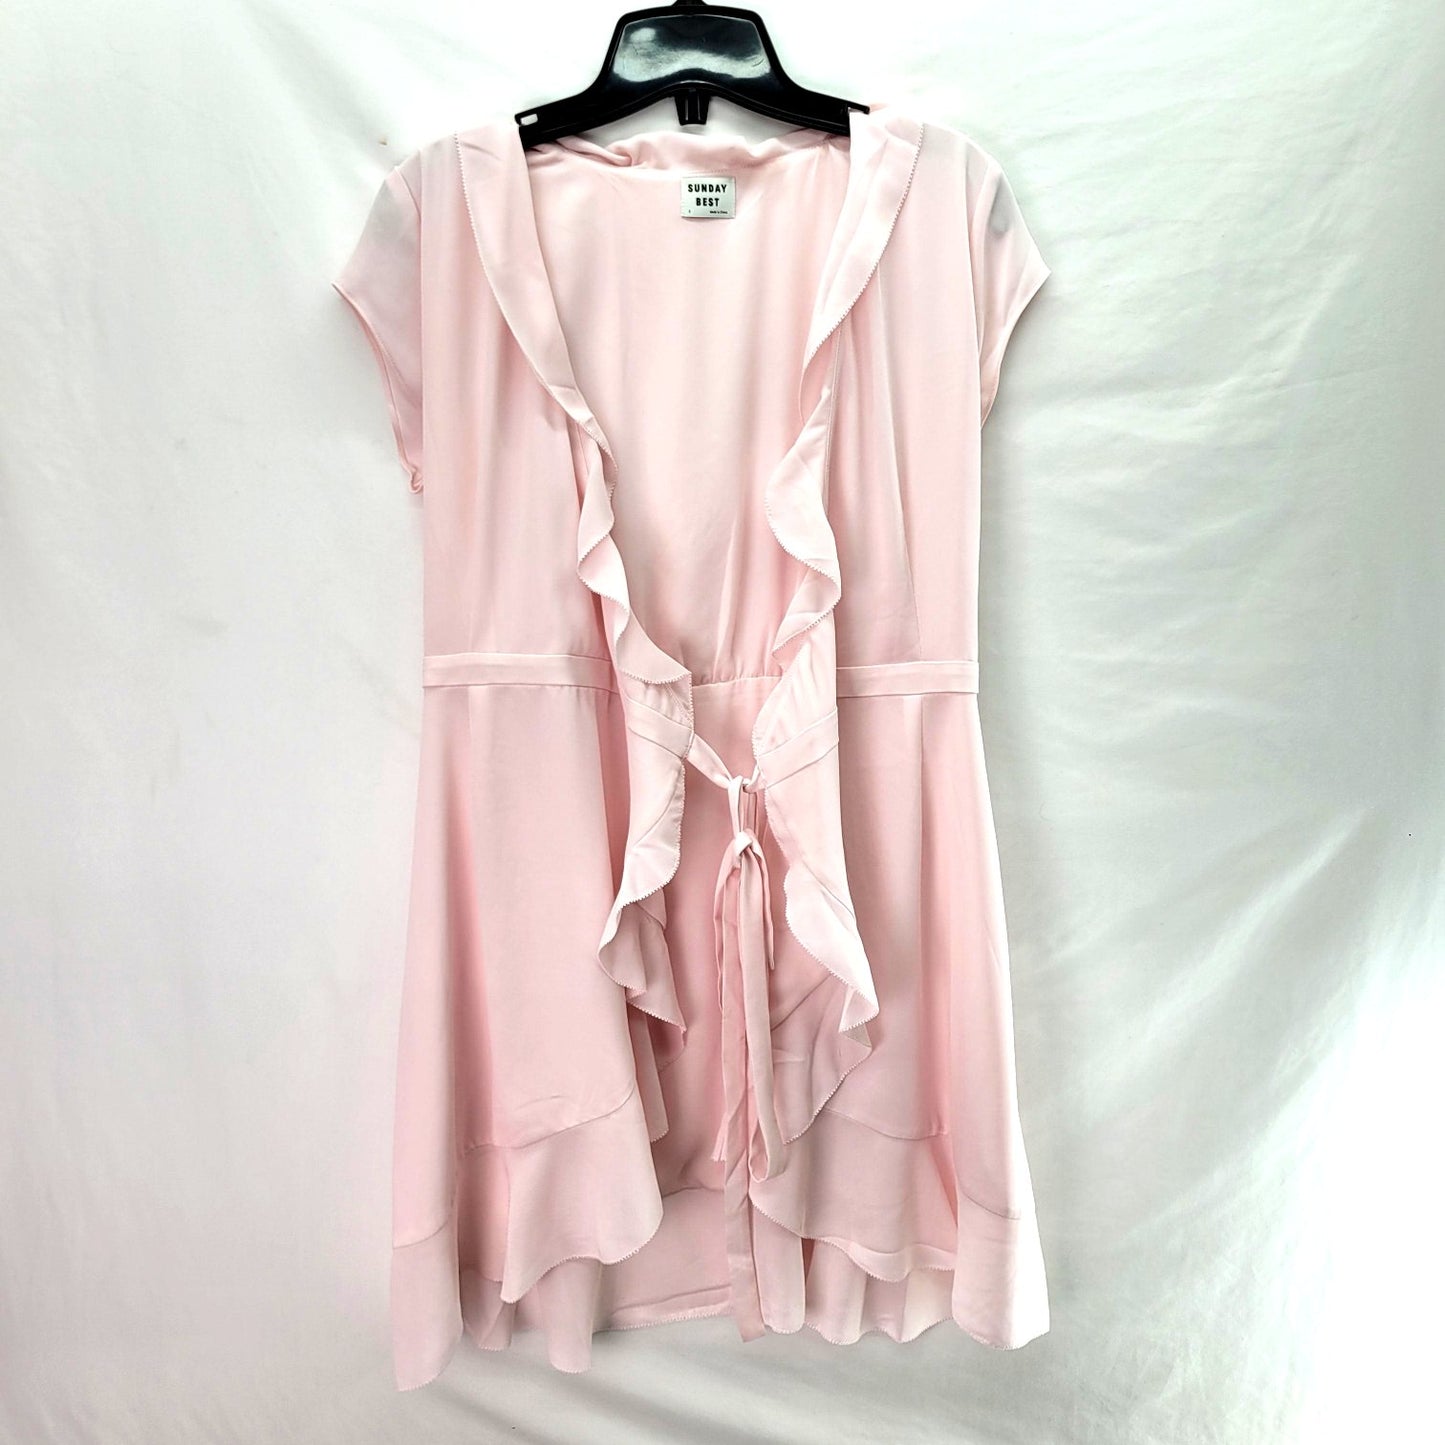 Sunday Best Women's Wrap Dress Pink - Size 2